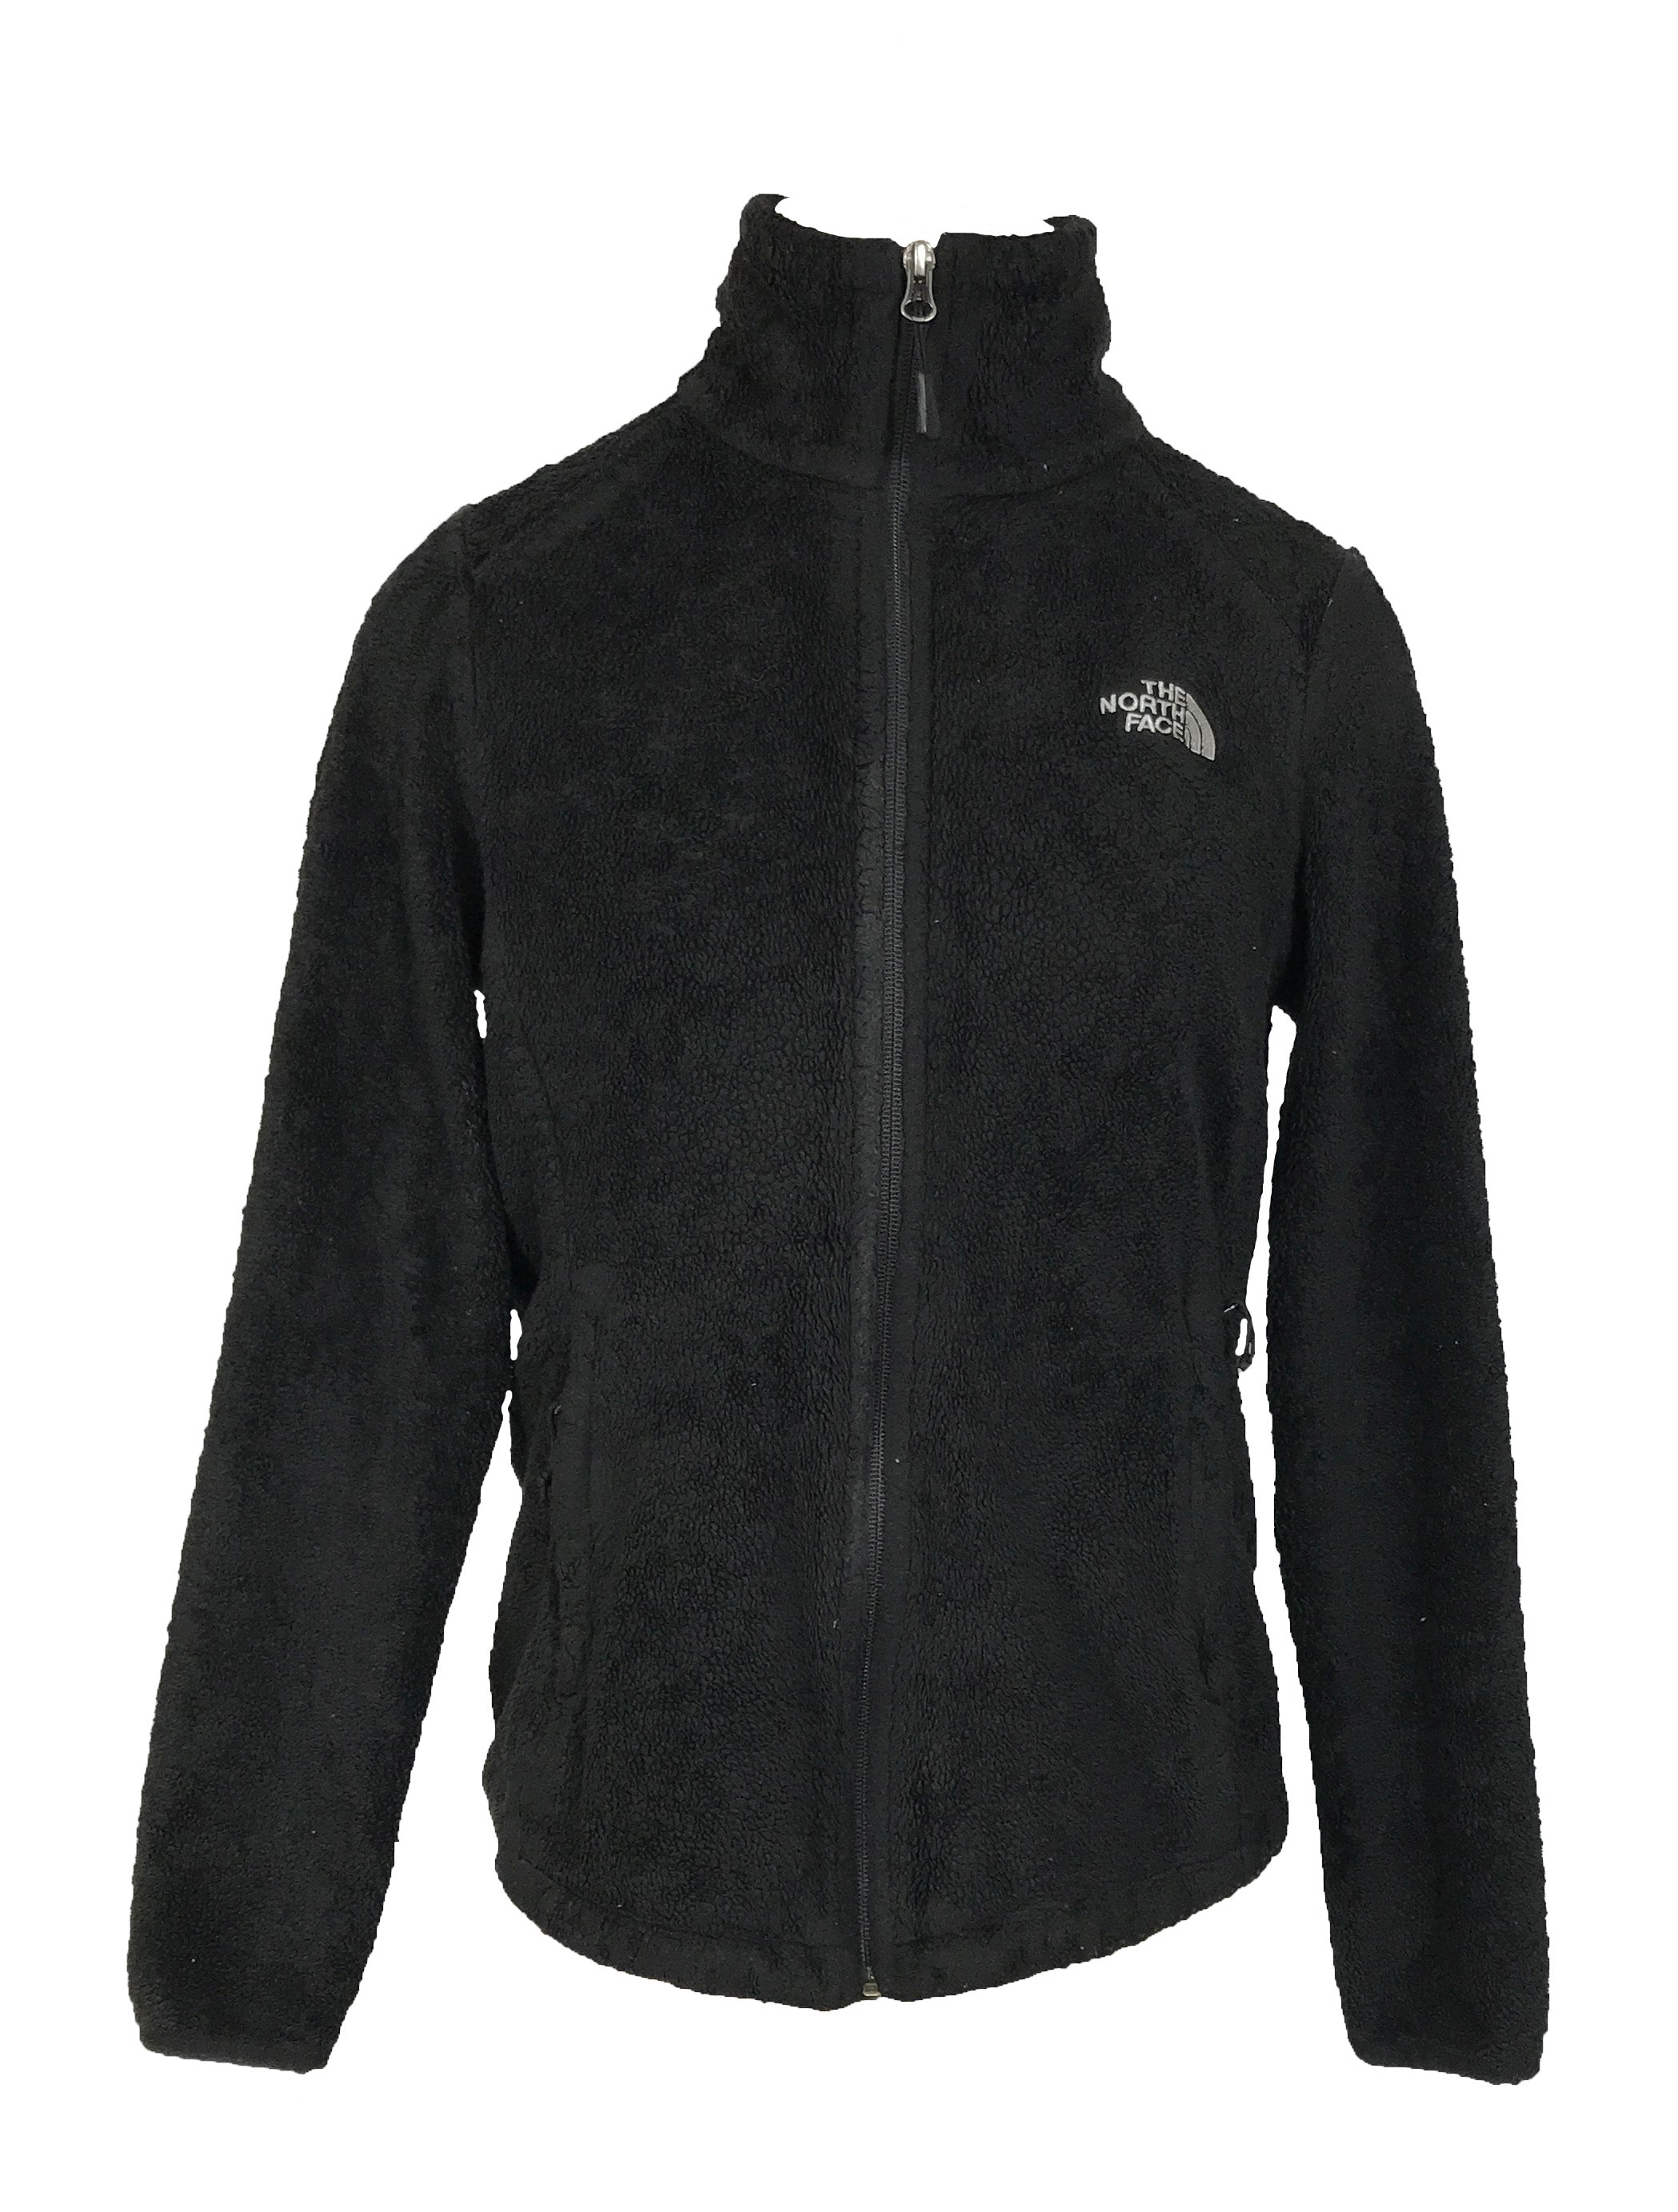 The North Face Fleece Black Osito Jacket Women's Size Medium